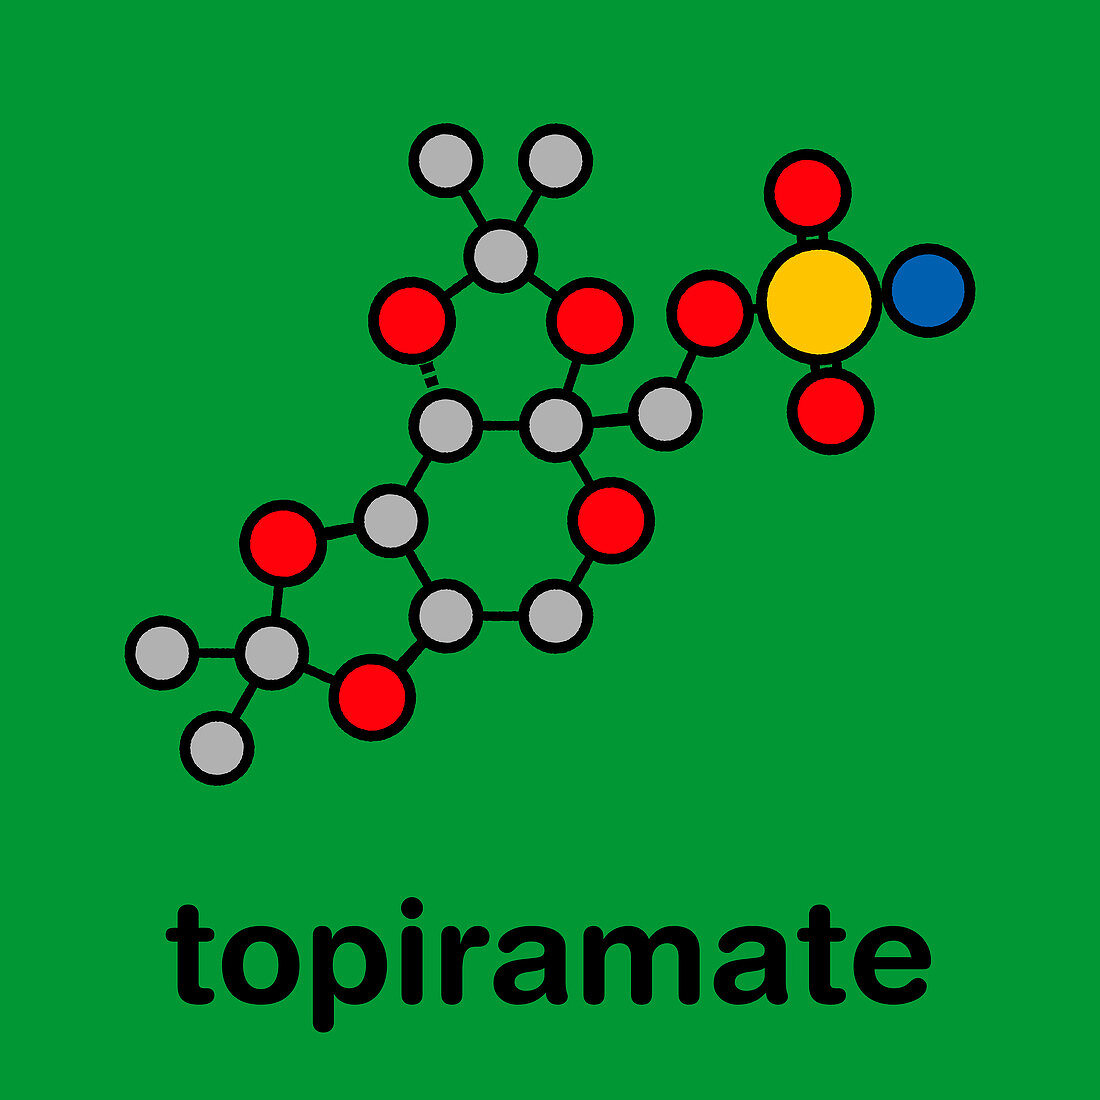 Topiramate epilepsy and weight loss drug, molecular model